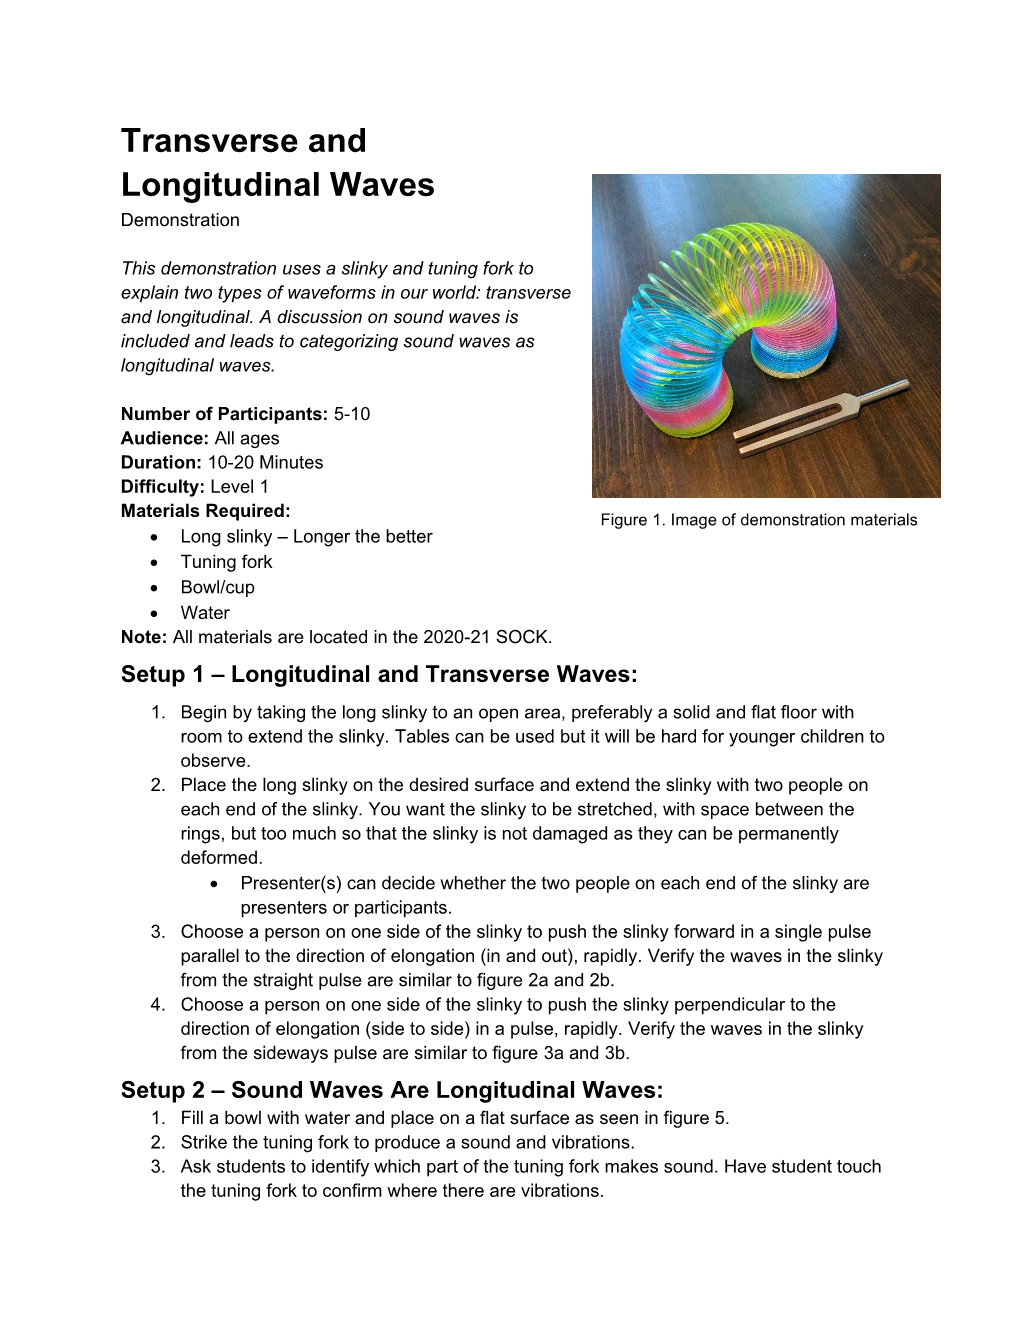 Transverse and Longitudinal Waves Demonstration